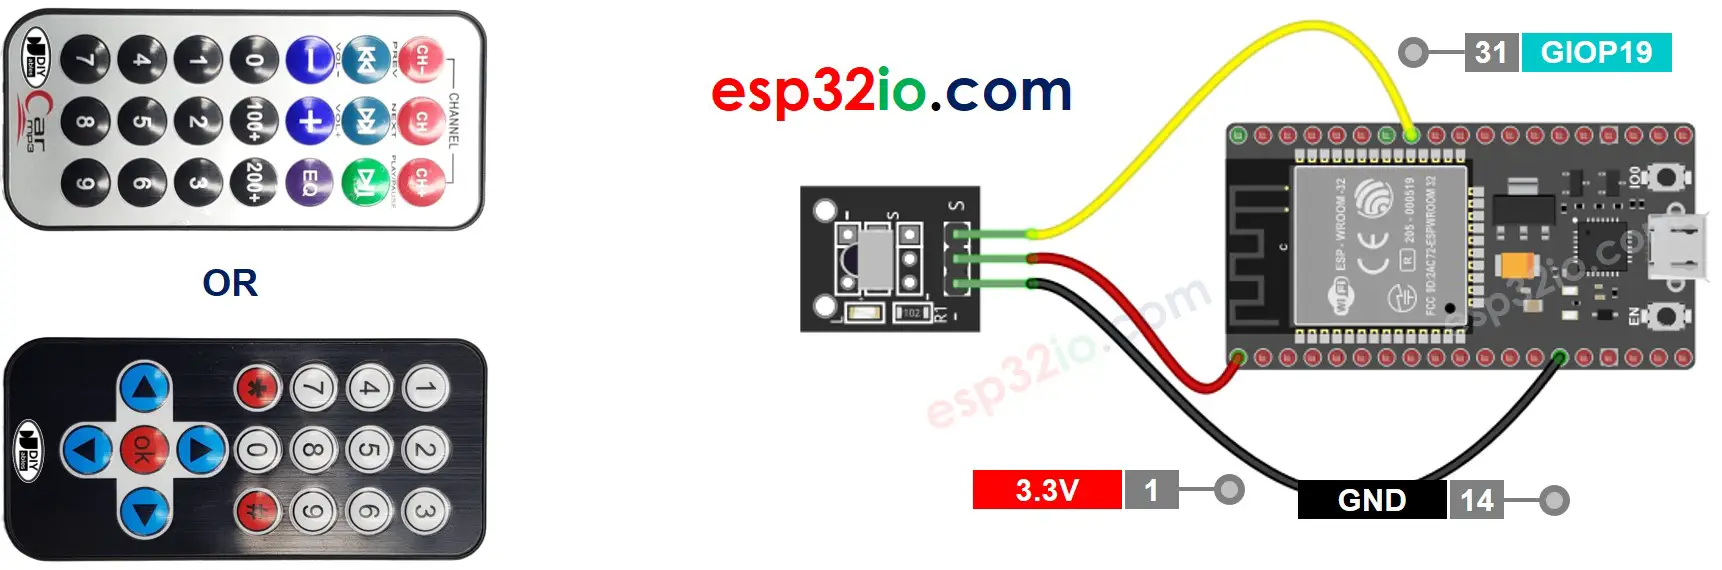 ESP32 IR Remote Control Wiring Diagram